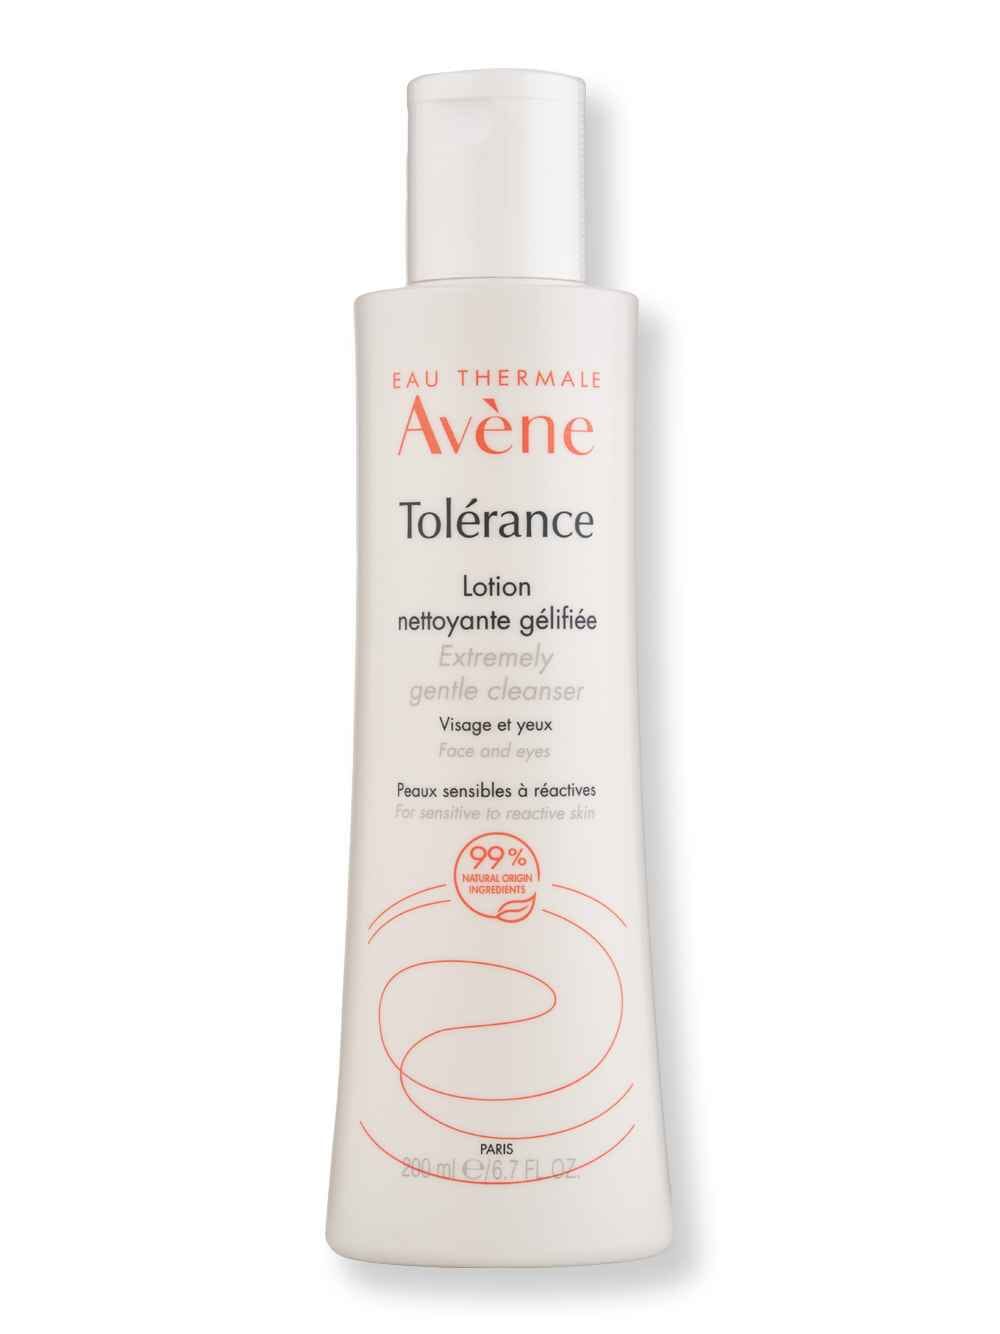 Avene Avene Tolerance Extremely Gentle Cleanser 6.7 fl oz200 ml Face Cleansers 